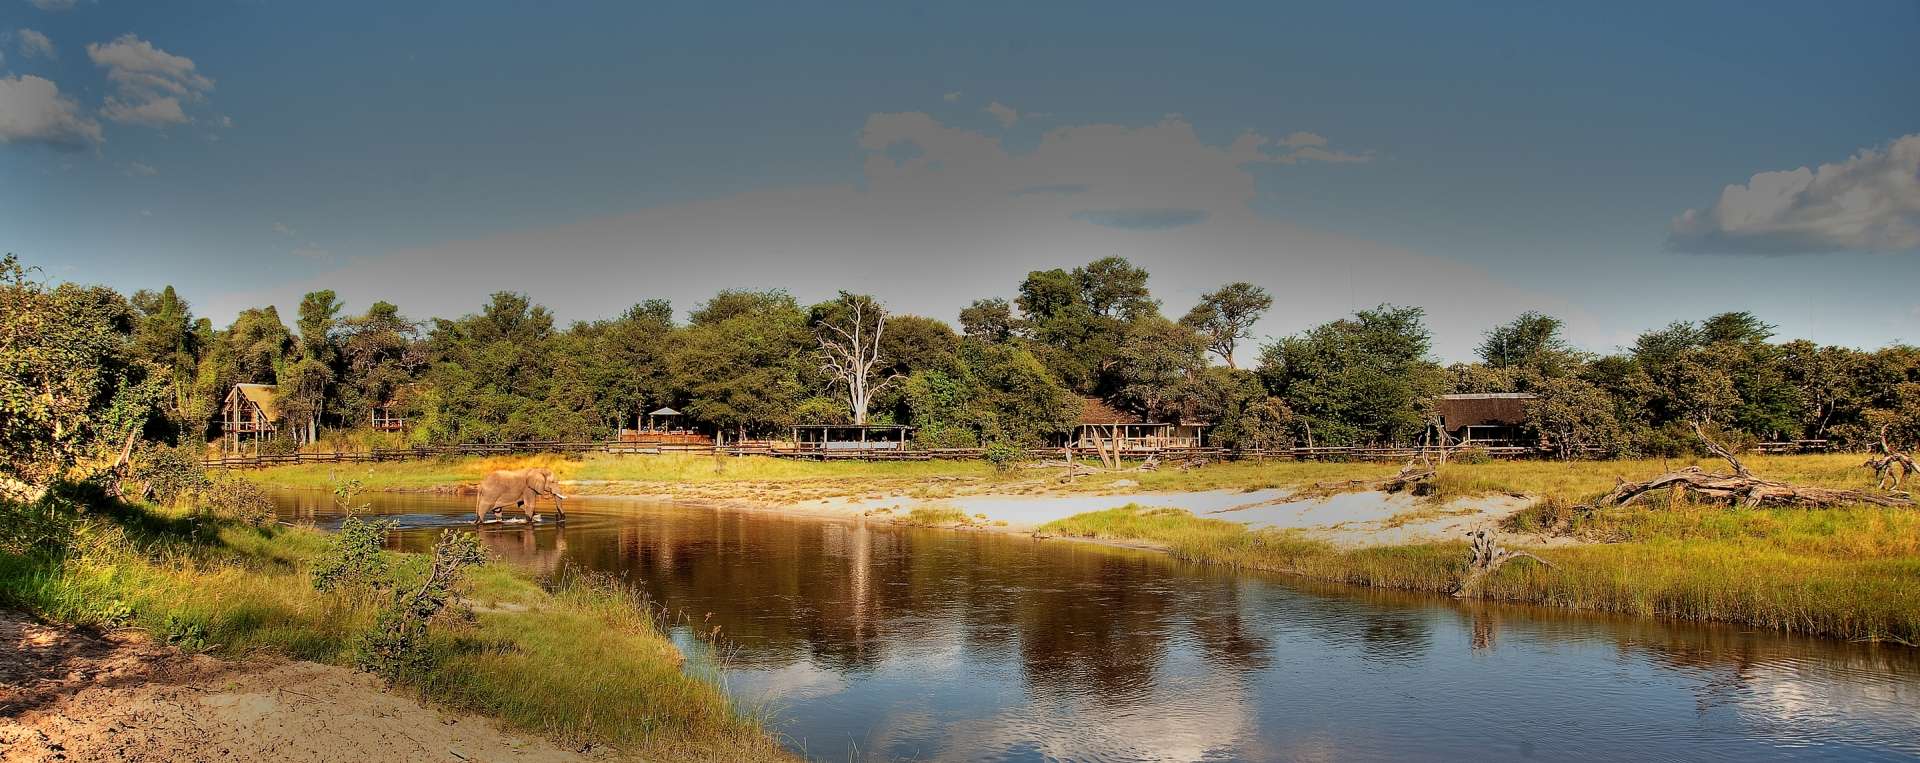 Savuti is nestled in a remote region of Chobe